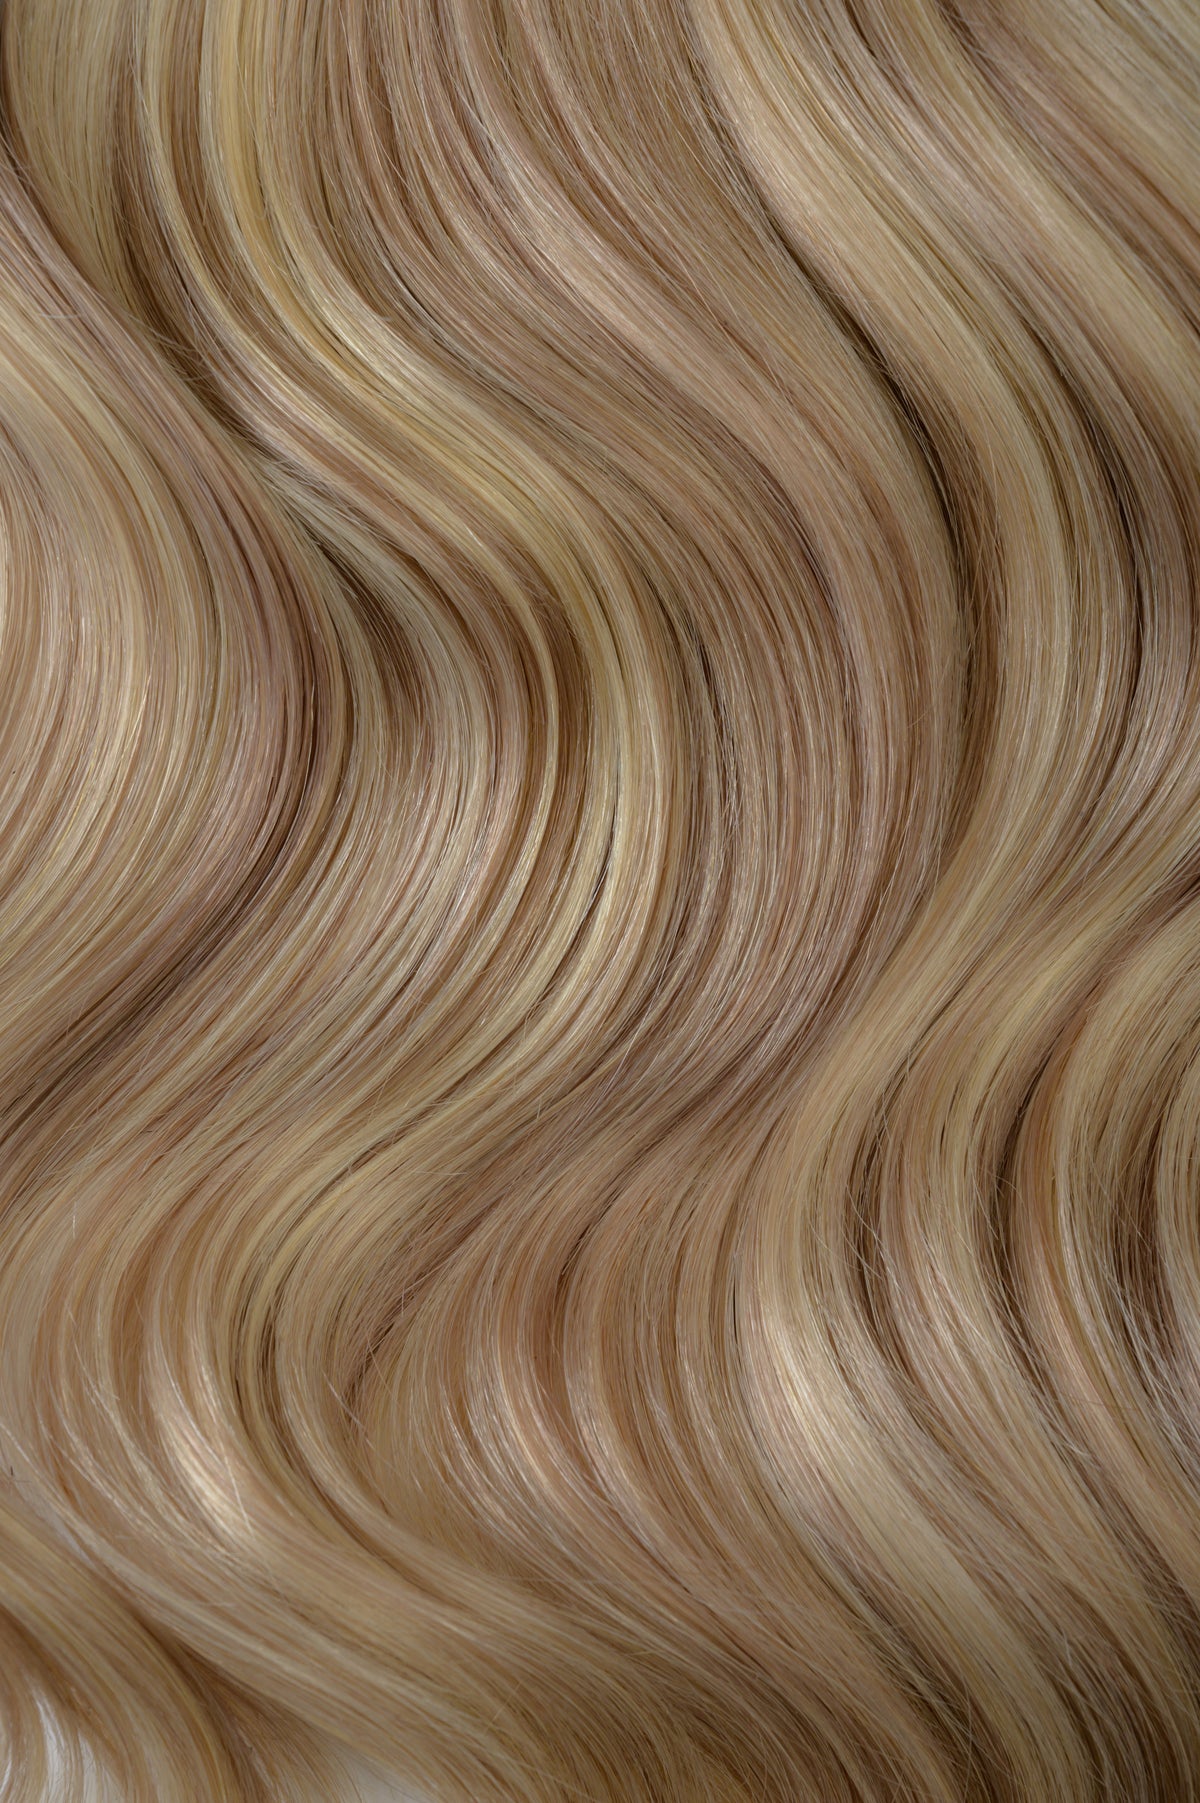 #18/613 Ash Blonde Highlights Nano Tip Hair Extensions